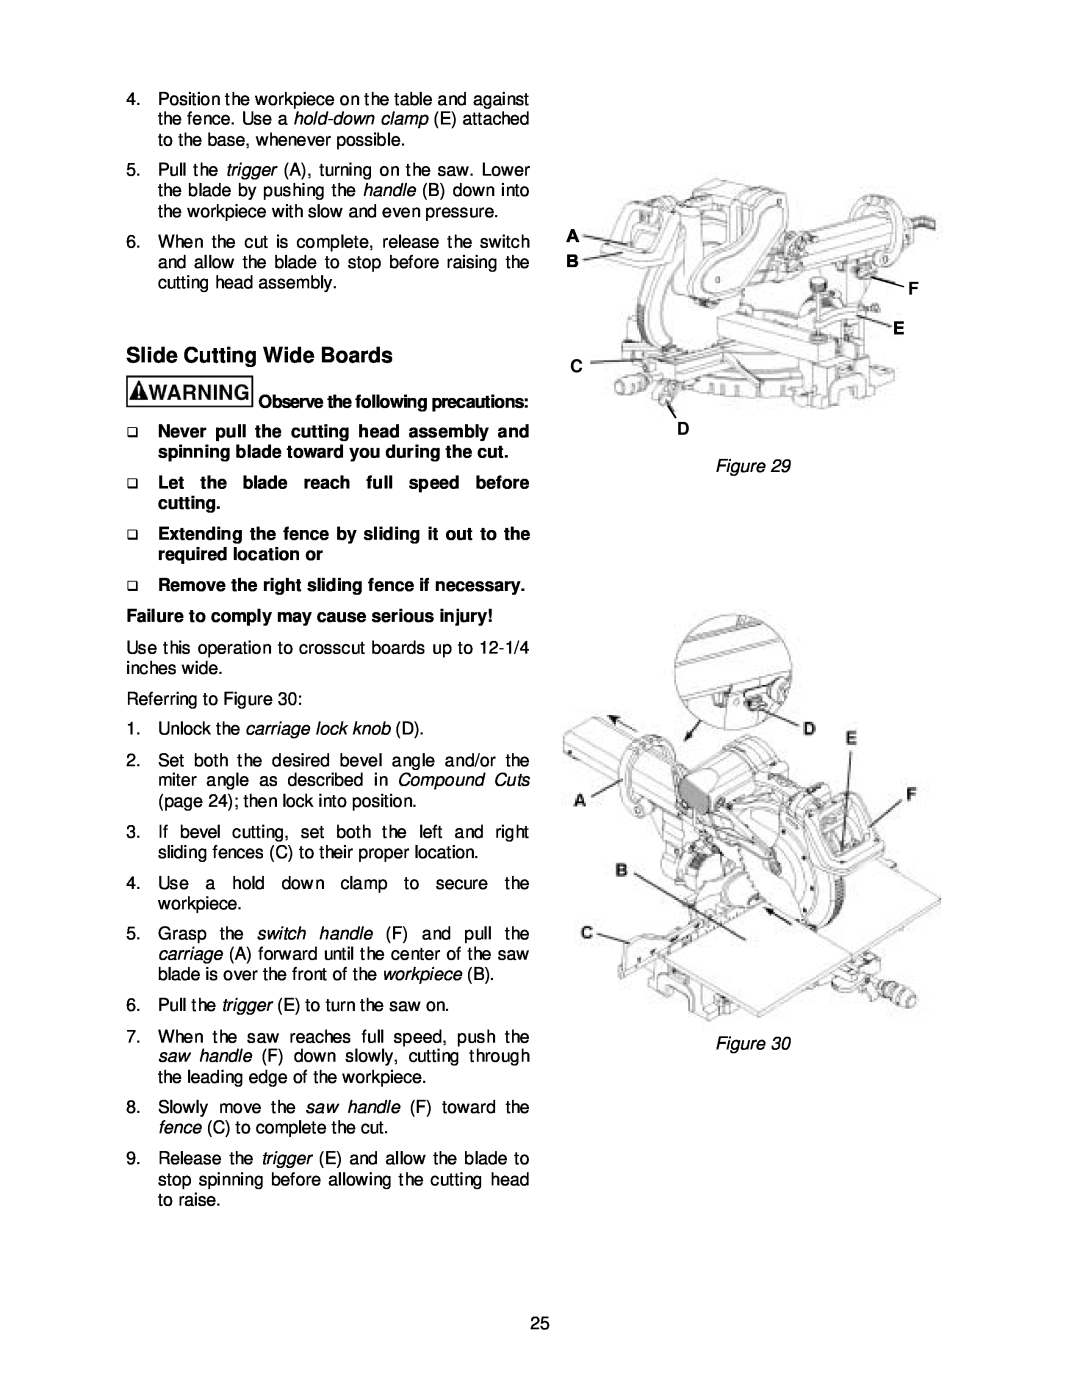 Jet Tools JMS-12SCMS manual Slide Cutting Wide Boards, Observe the following precautions, Unlock the carriage lock knob D 